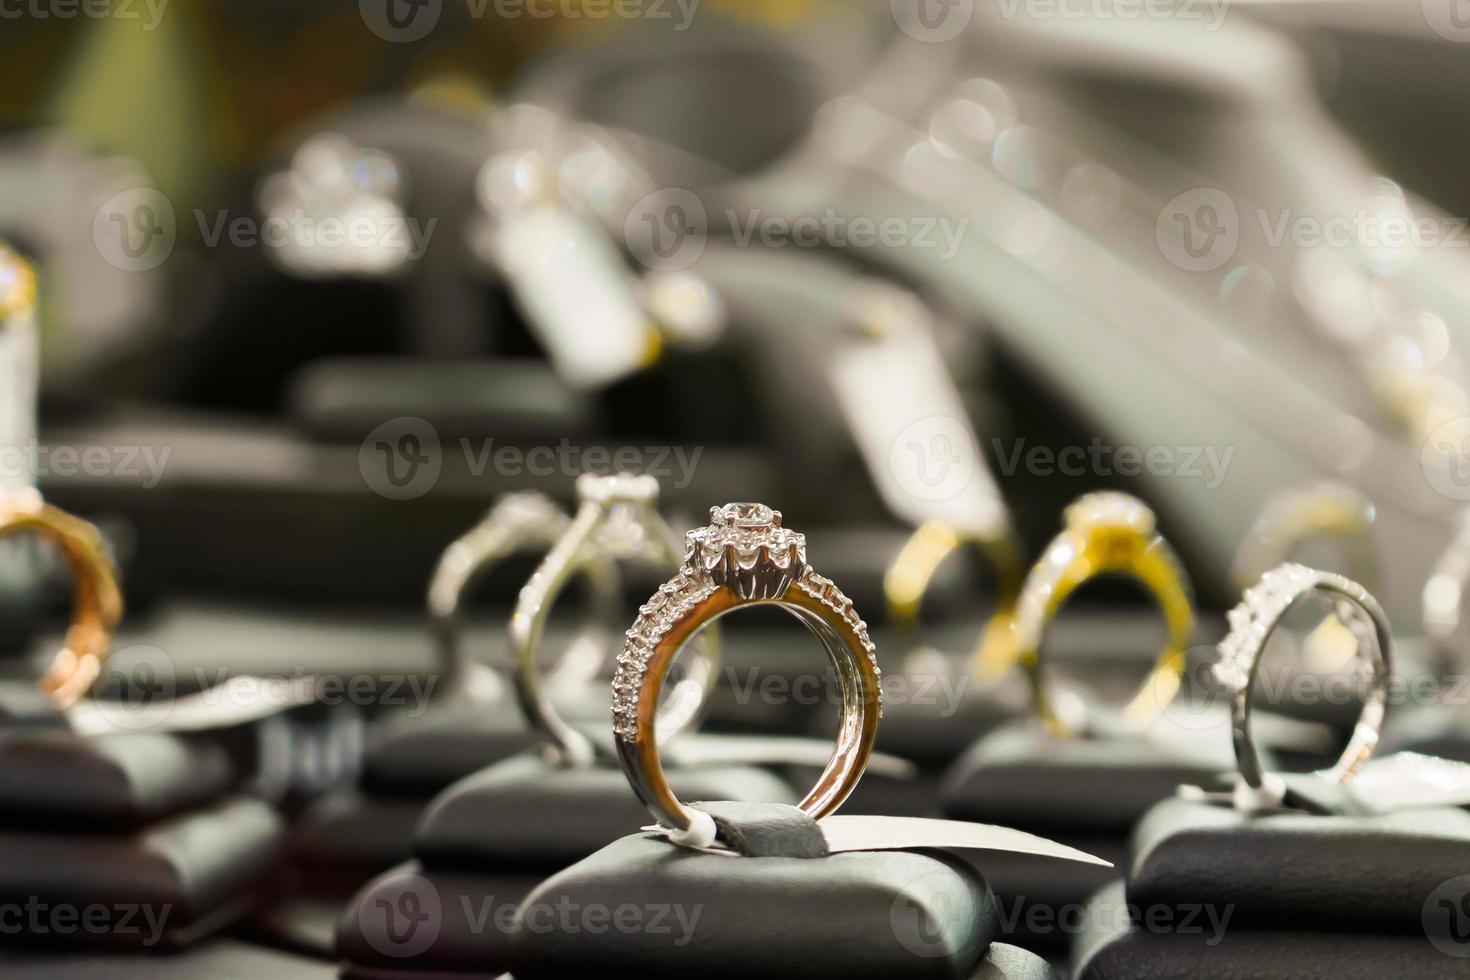 jewelry diamond rings show in luxury retail store window display showcase photo